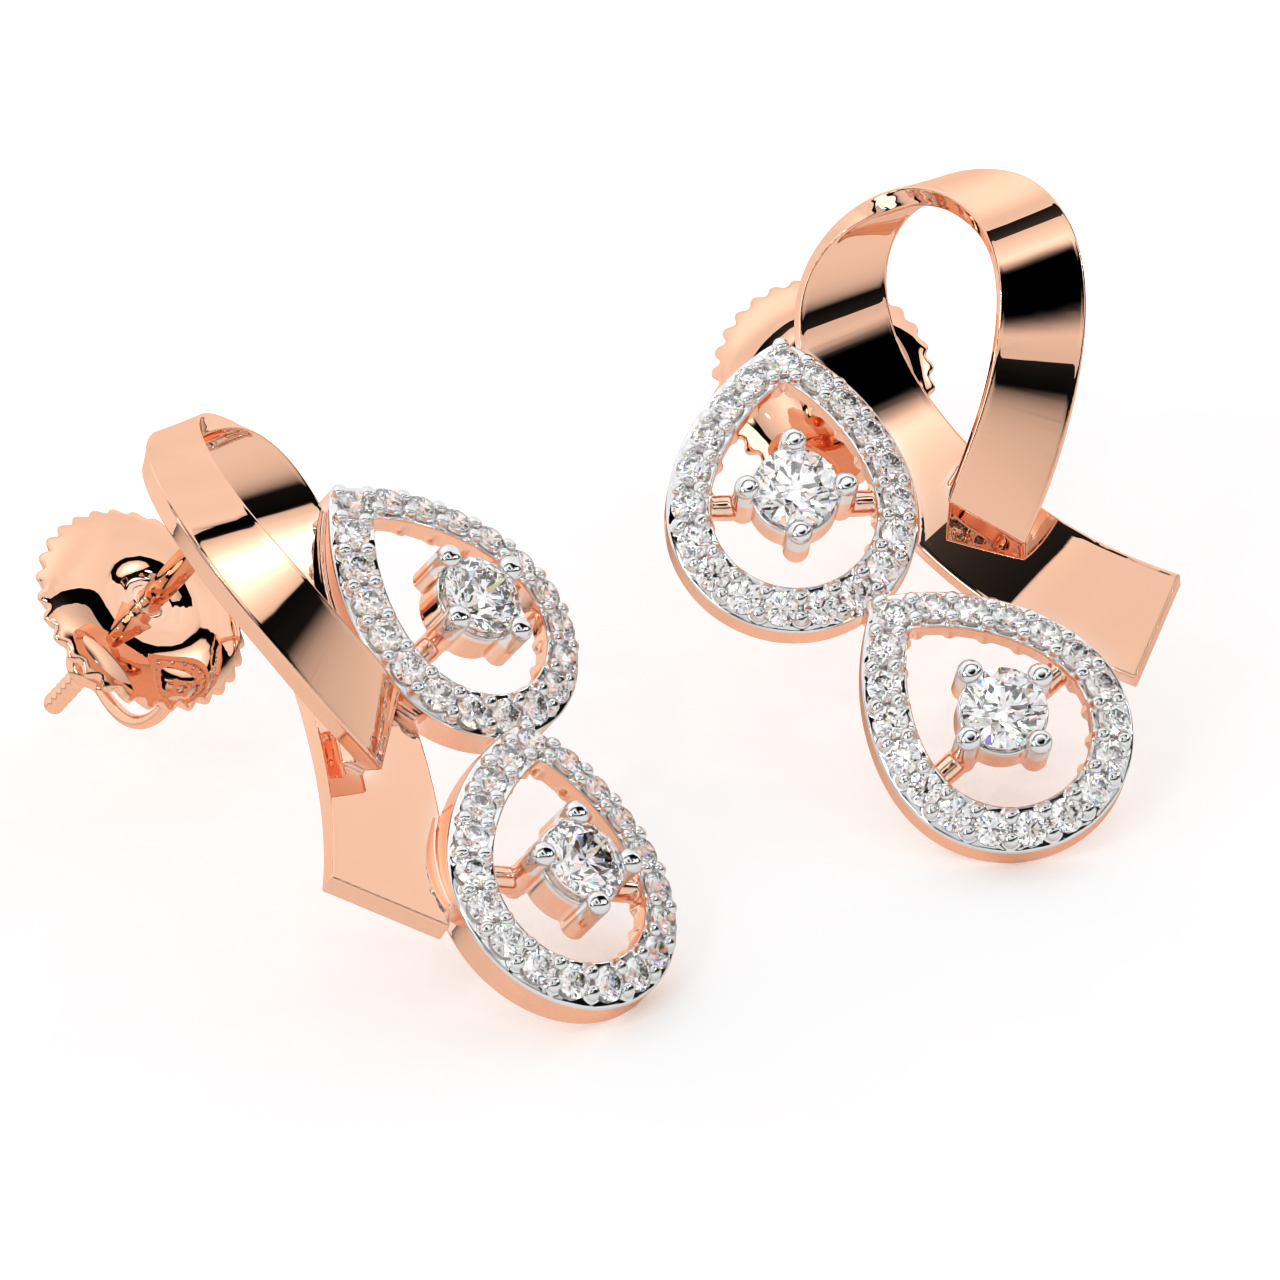 The Chic O Mania Diamond Earrings